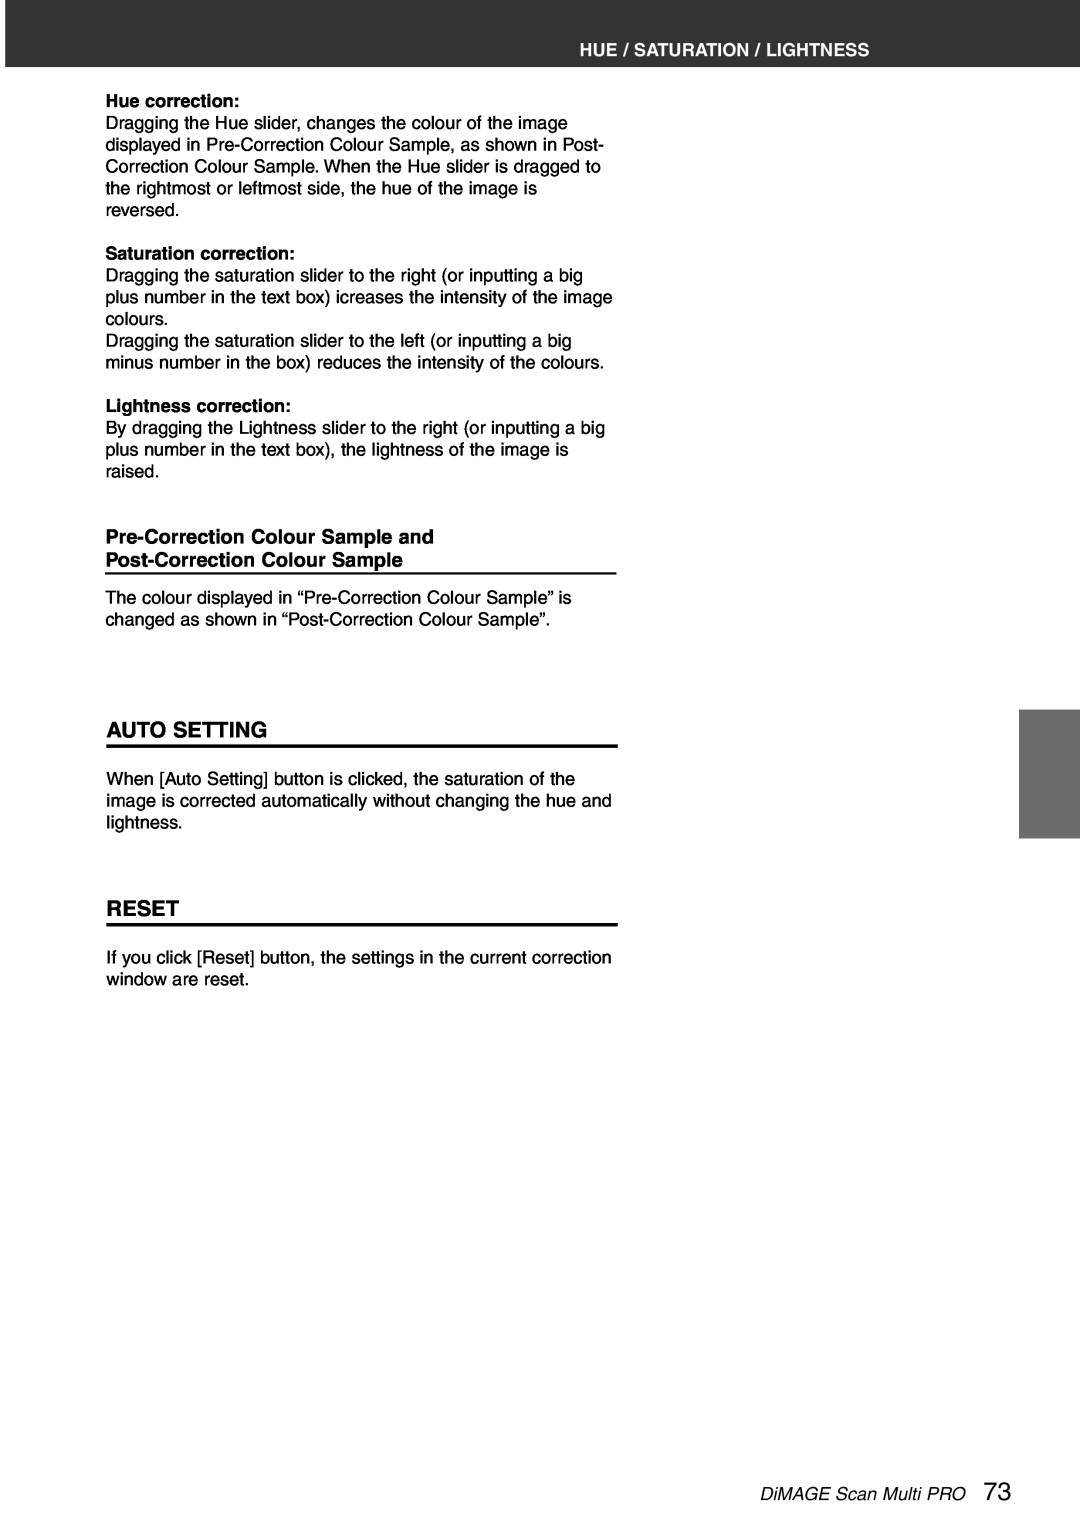 Konica Minolta Scan Multi PRO Auto Setting, Reset, Pre-Correction Colour Sample and Post-Correction Colour Sample 